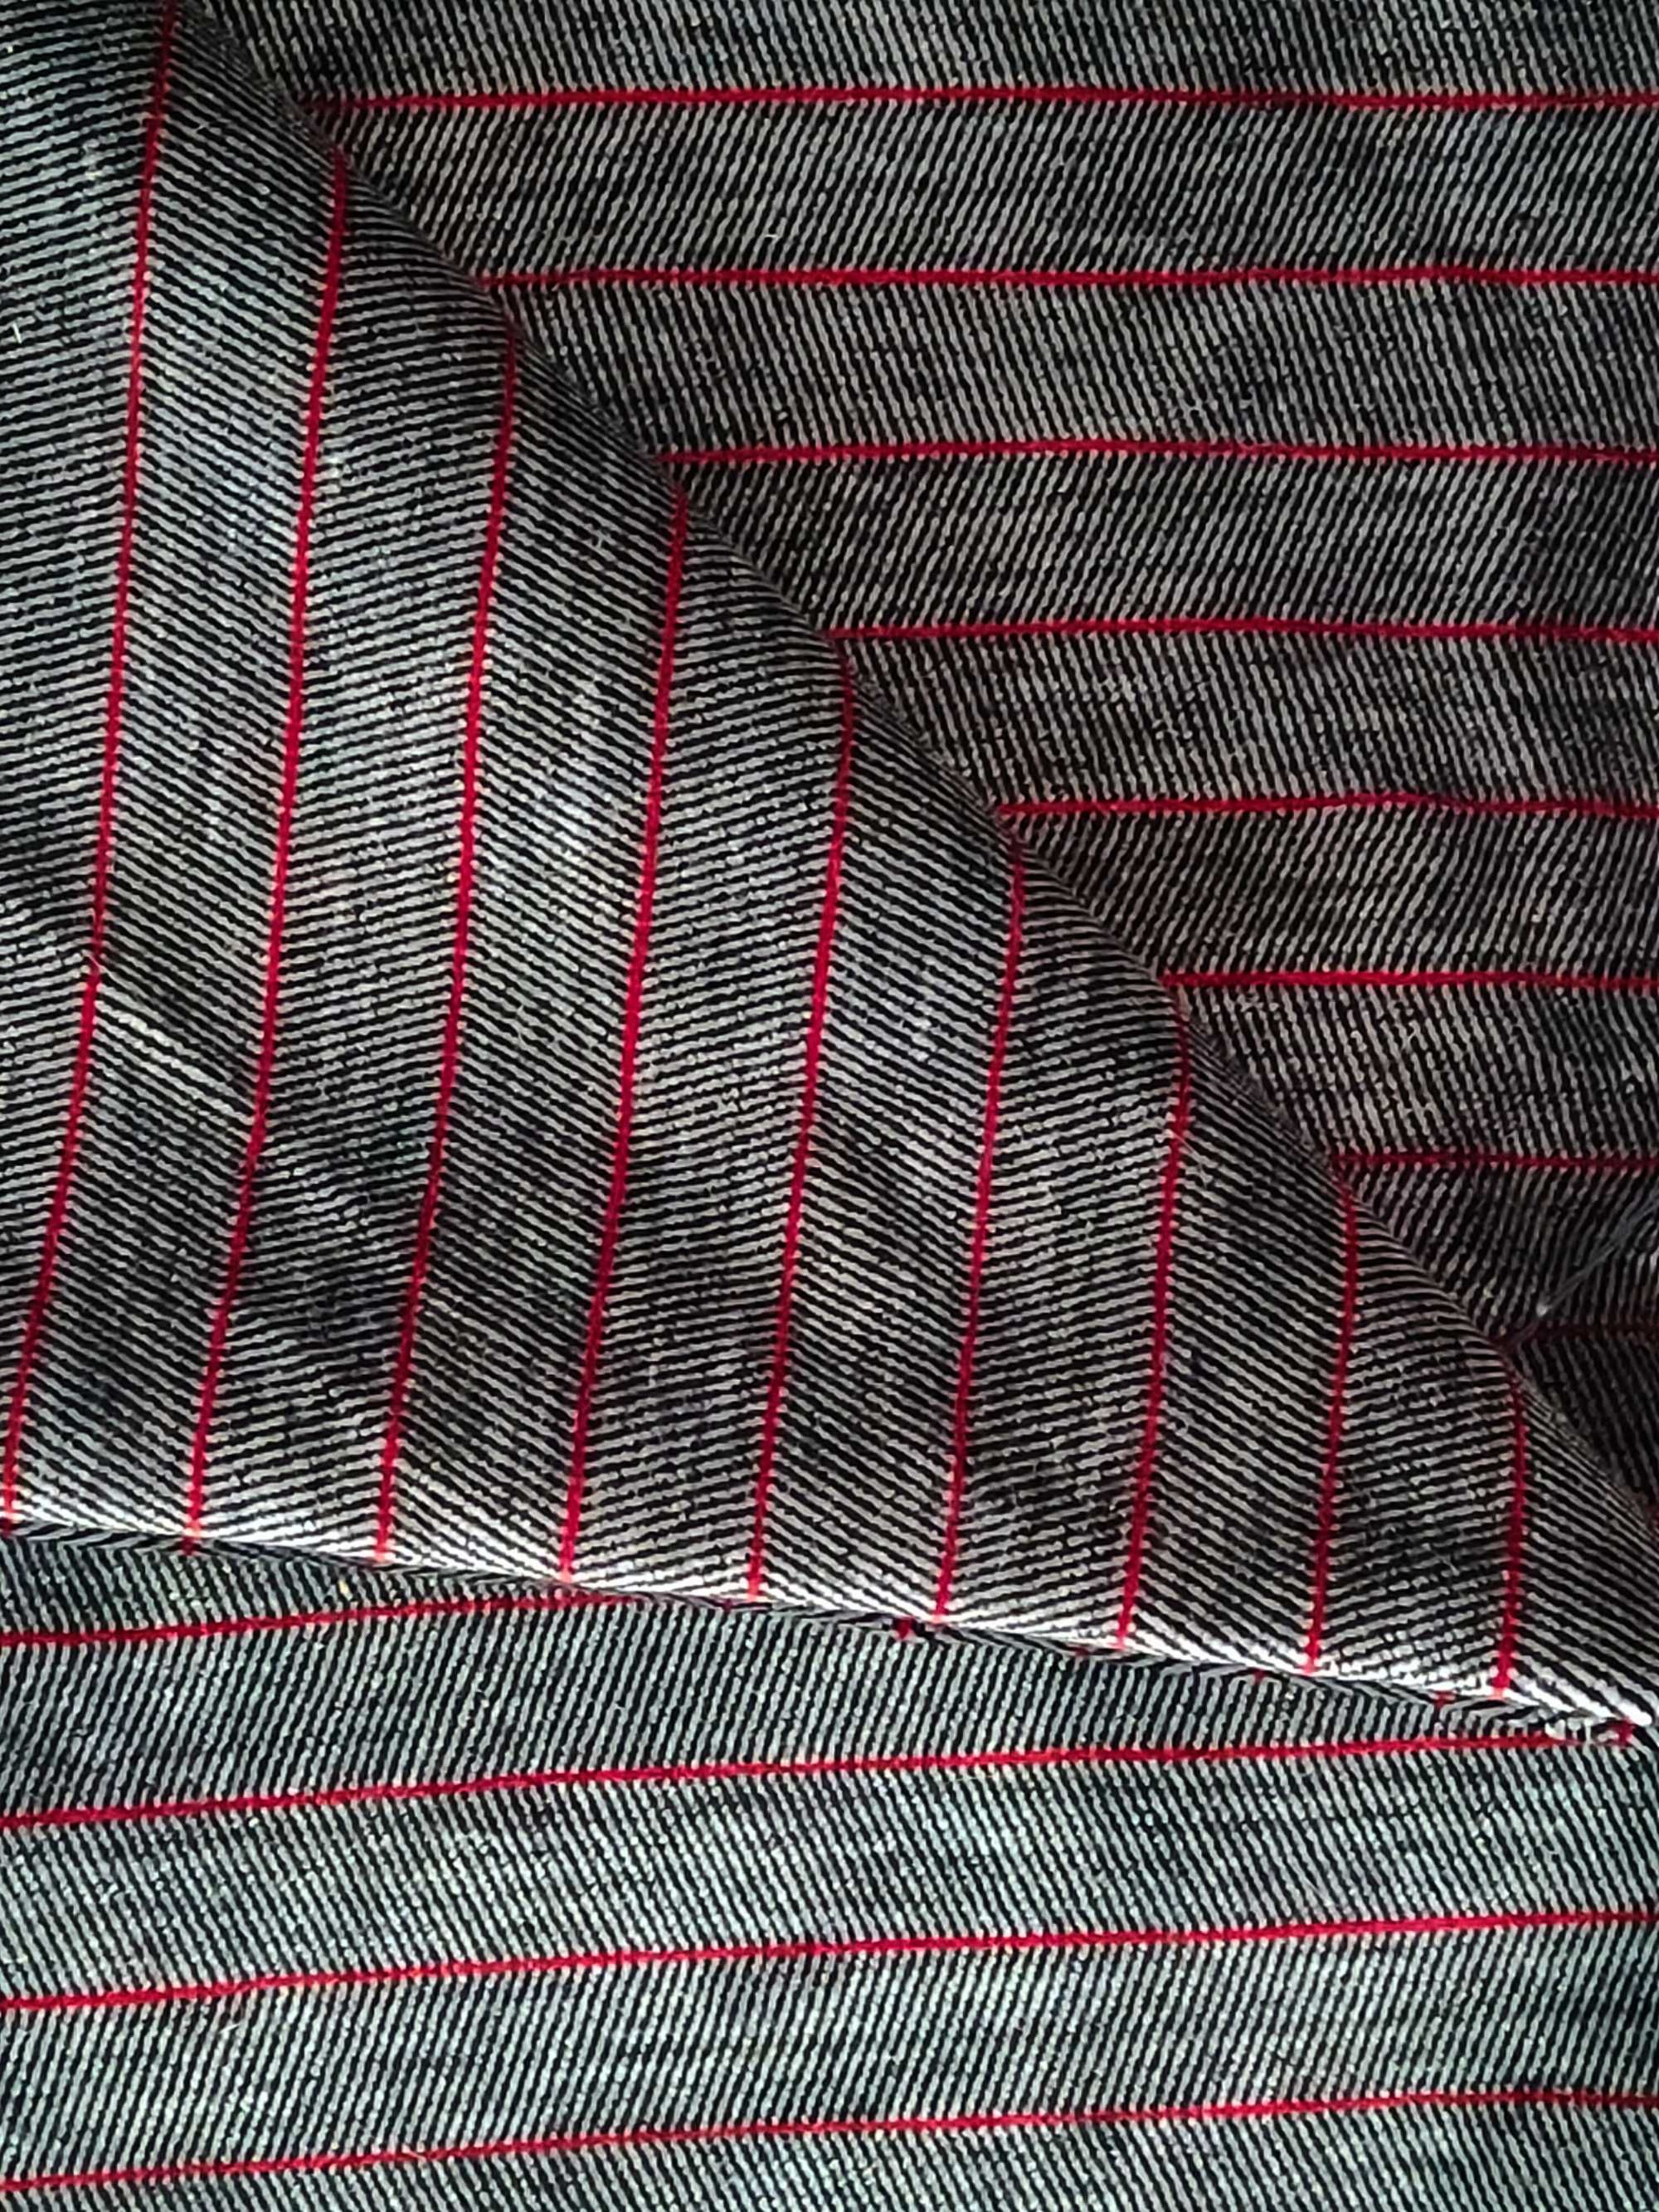 Tkanina tapicerska, meblowa / materiał obiciowy